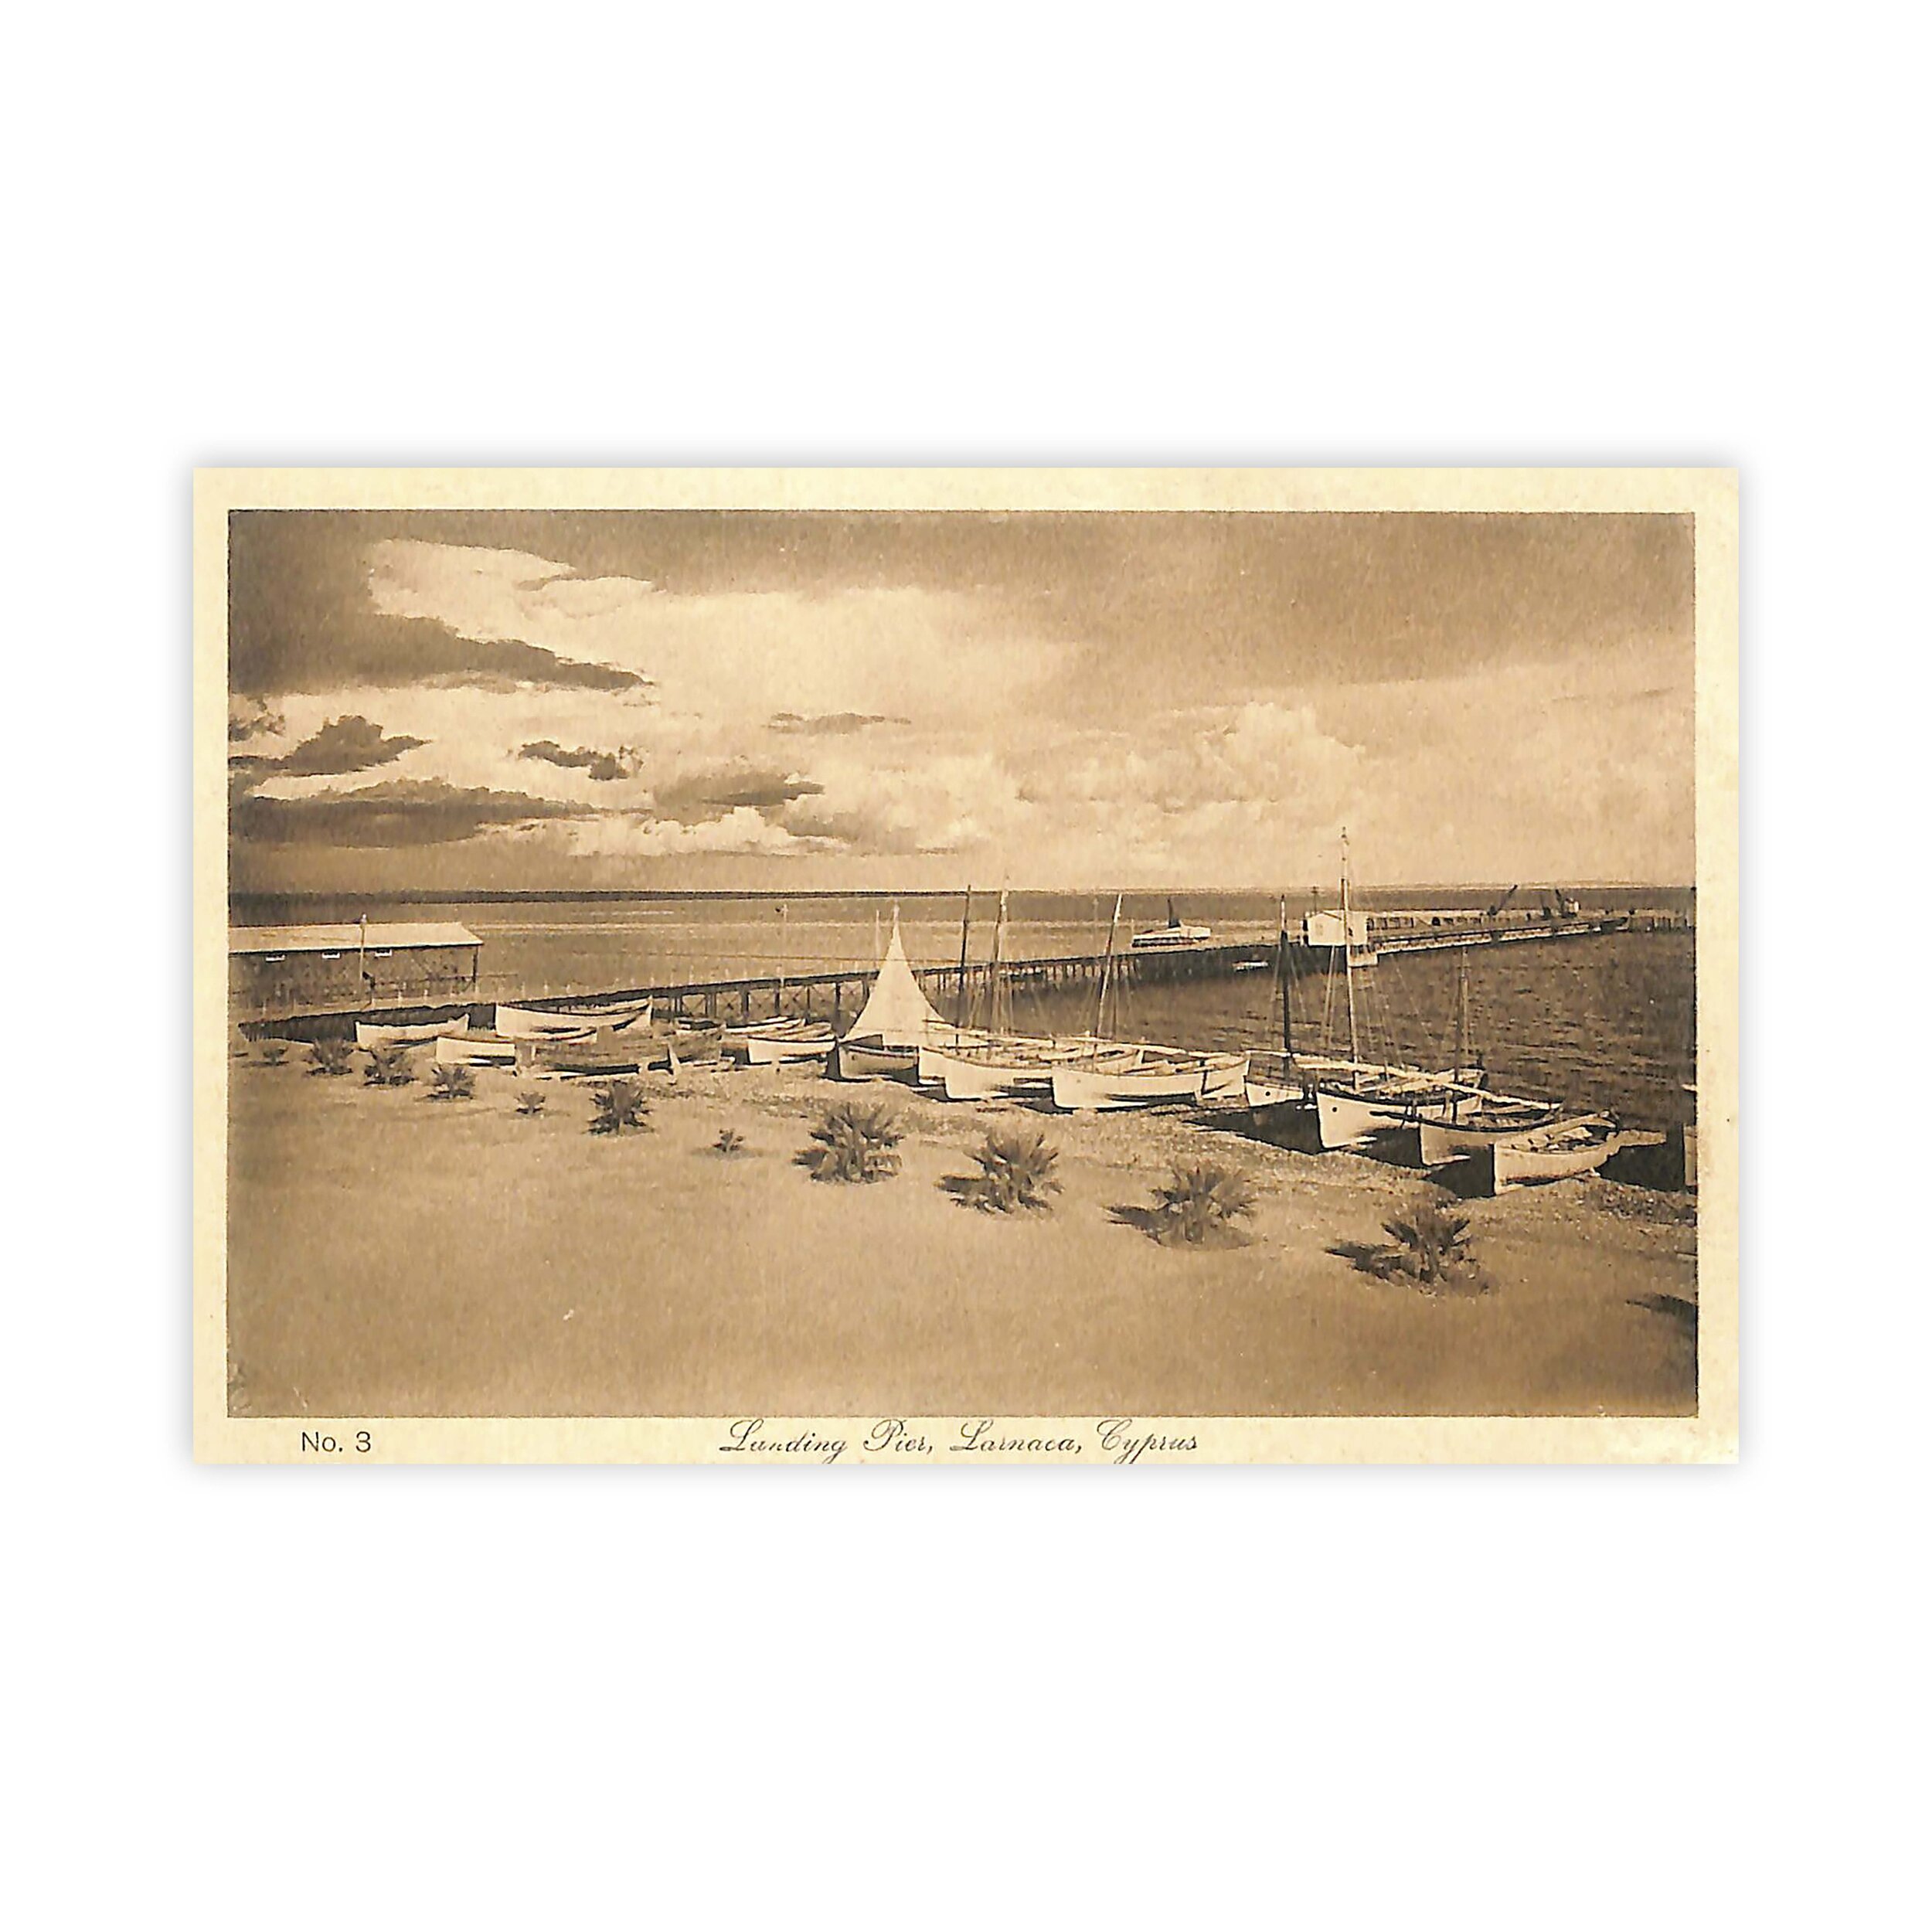  “Landing Pier, Larnaca, Cyprus”, Post-card, Pier - Larnaca, 1920s 